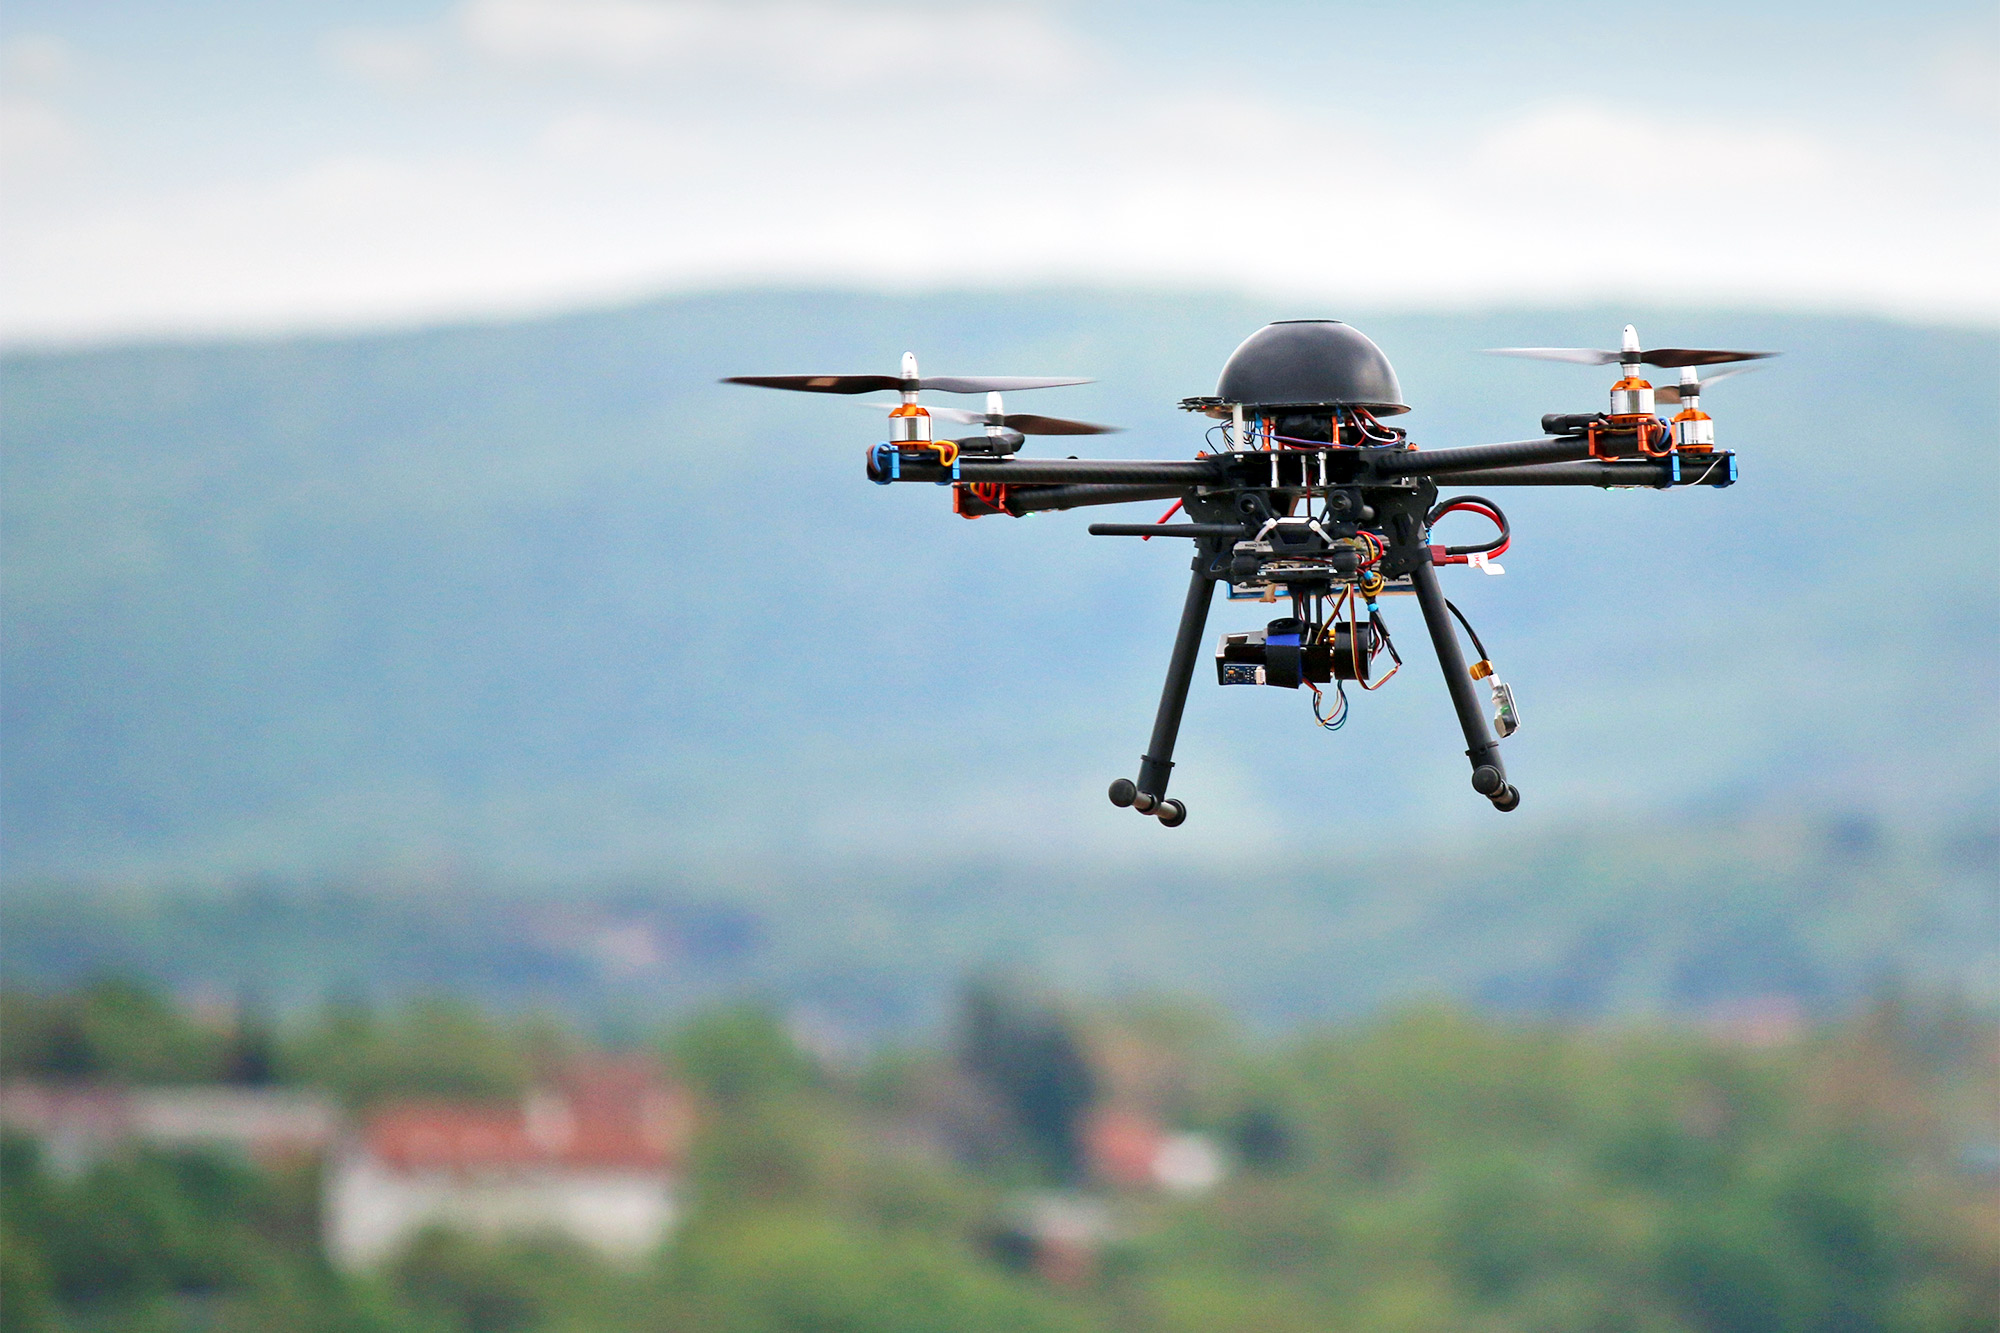 More information about "Τα drone στη μάχη κατά της ανομβρίας"